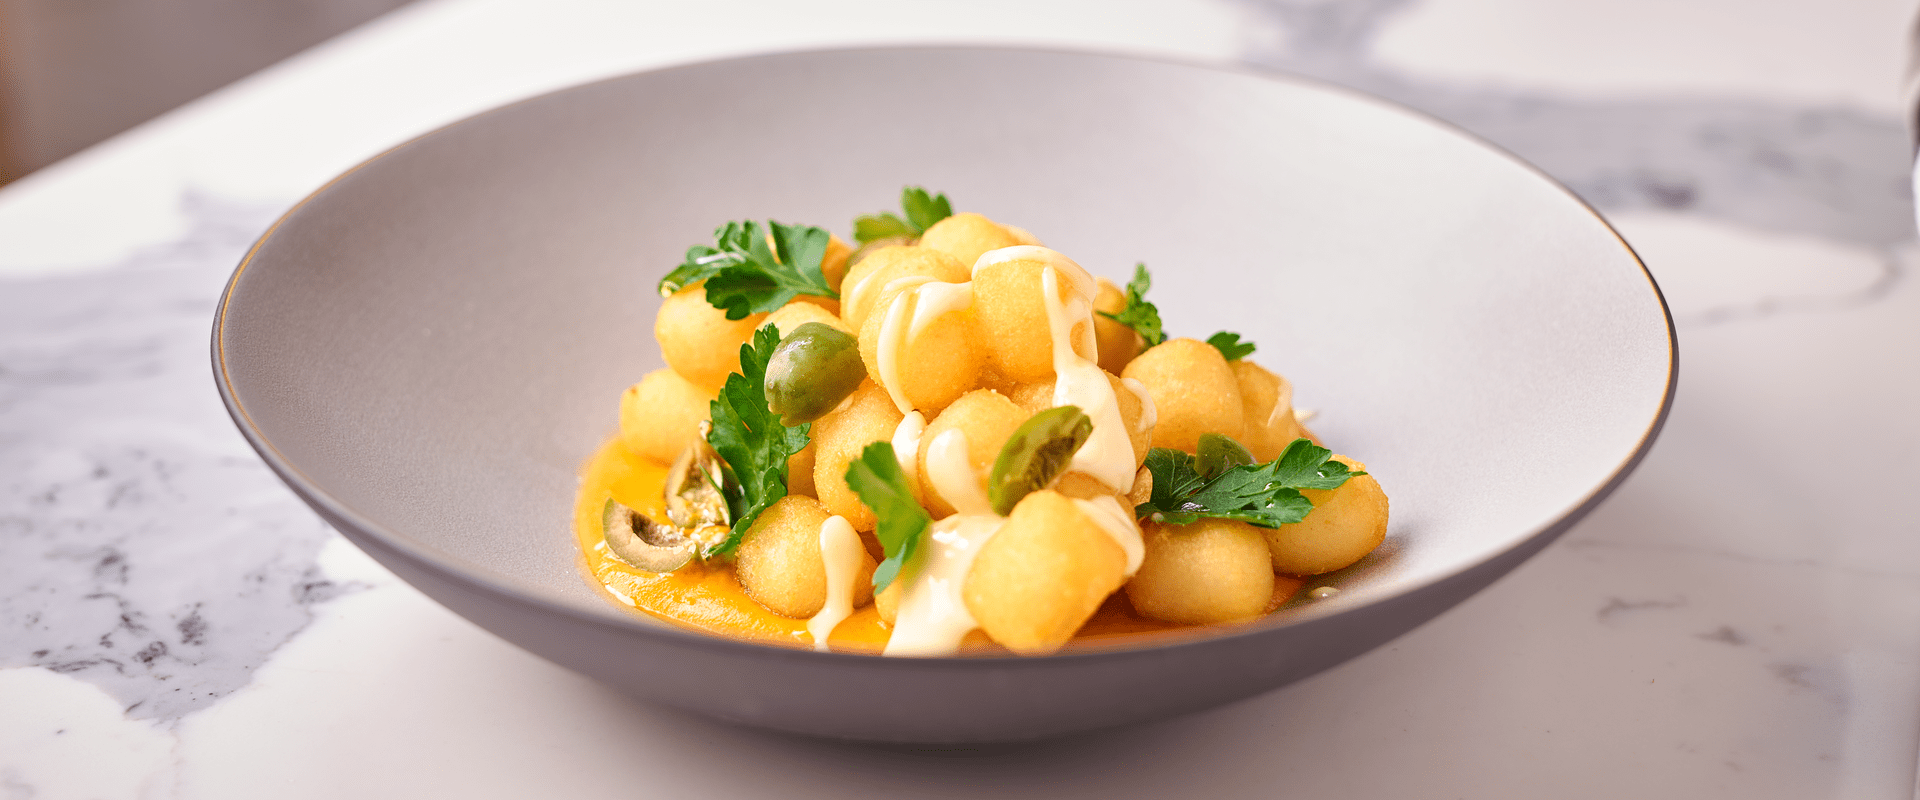 Mini Potato Mashers - cooking with chef bryan